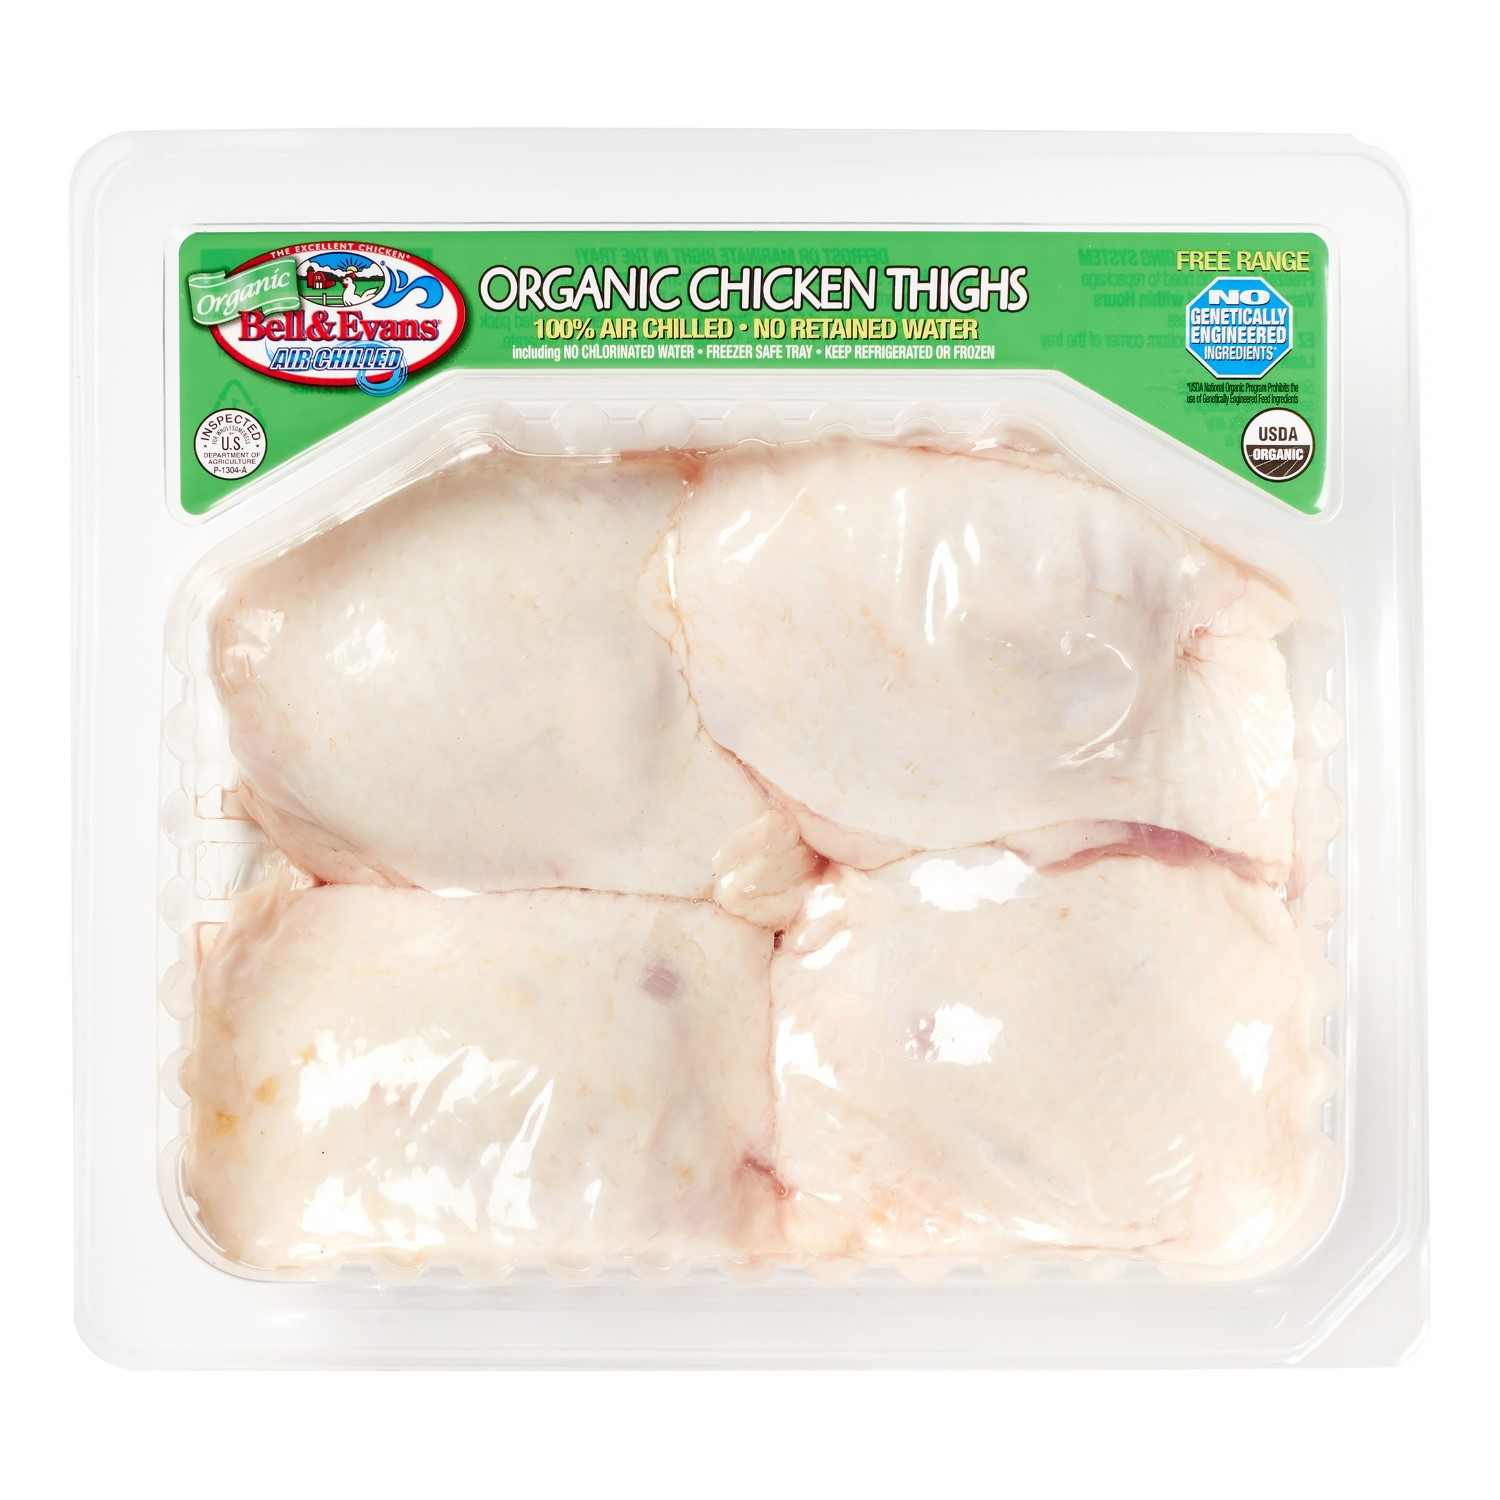 Organic Chicken Thighs
 Bell & Evans Organic Bone In Chicken Thighs apx 1 Lb